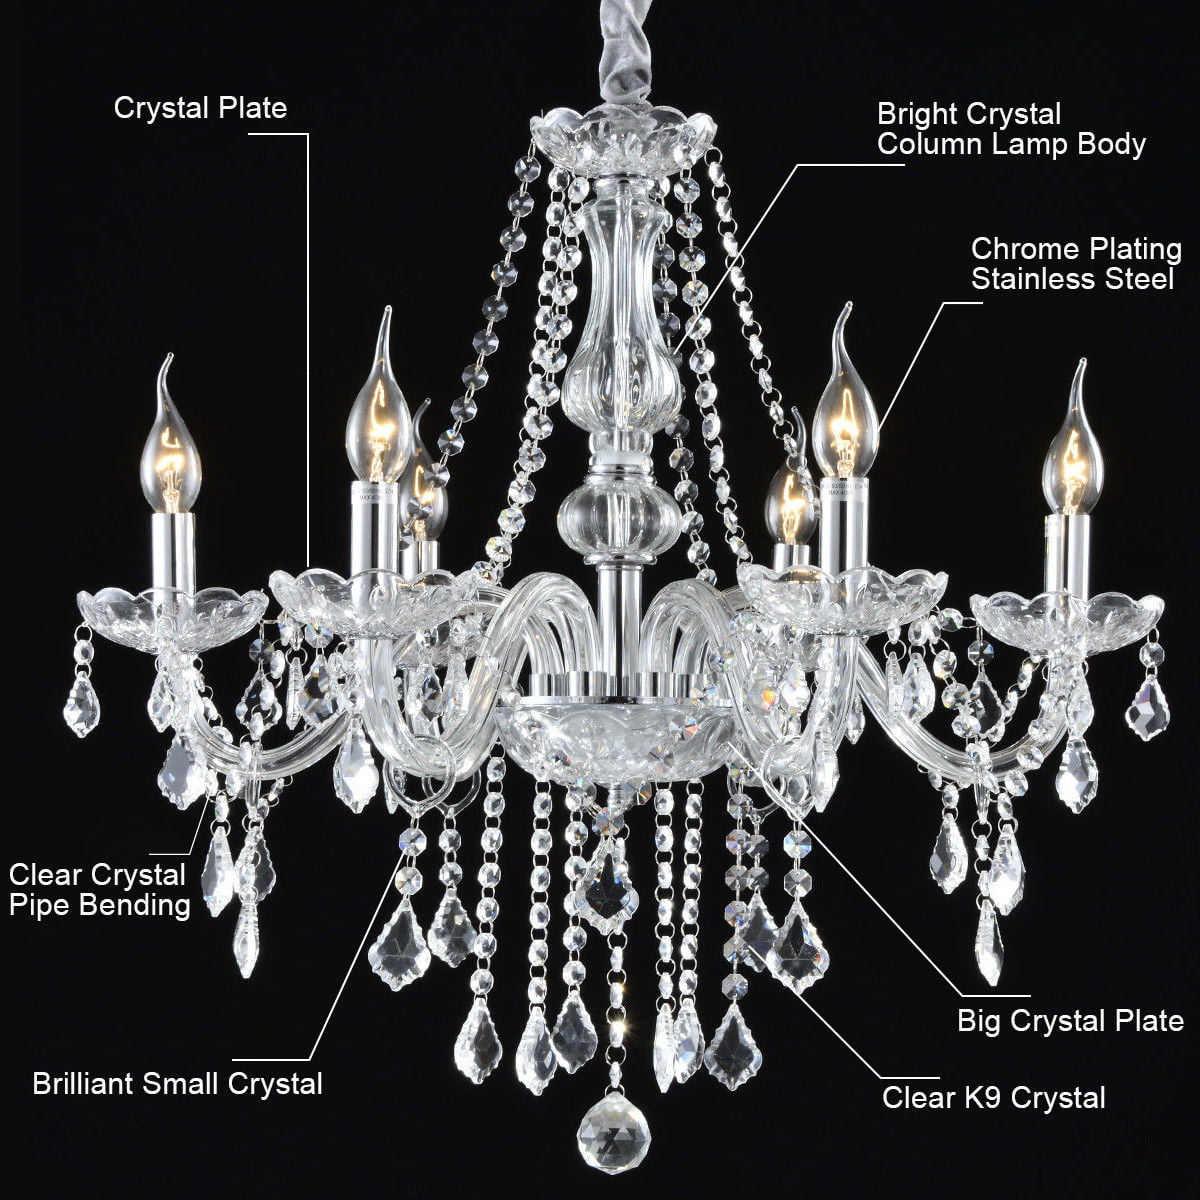 Modern K9 Crystal Chandelier Ceiling Light Lamp Lighting Home Room Fixture Decor 